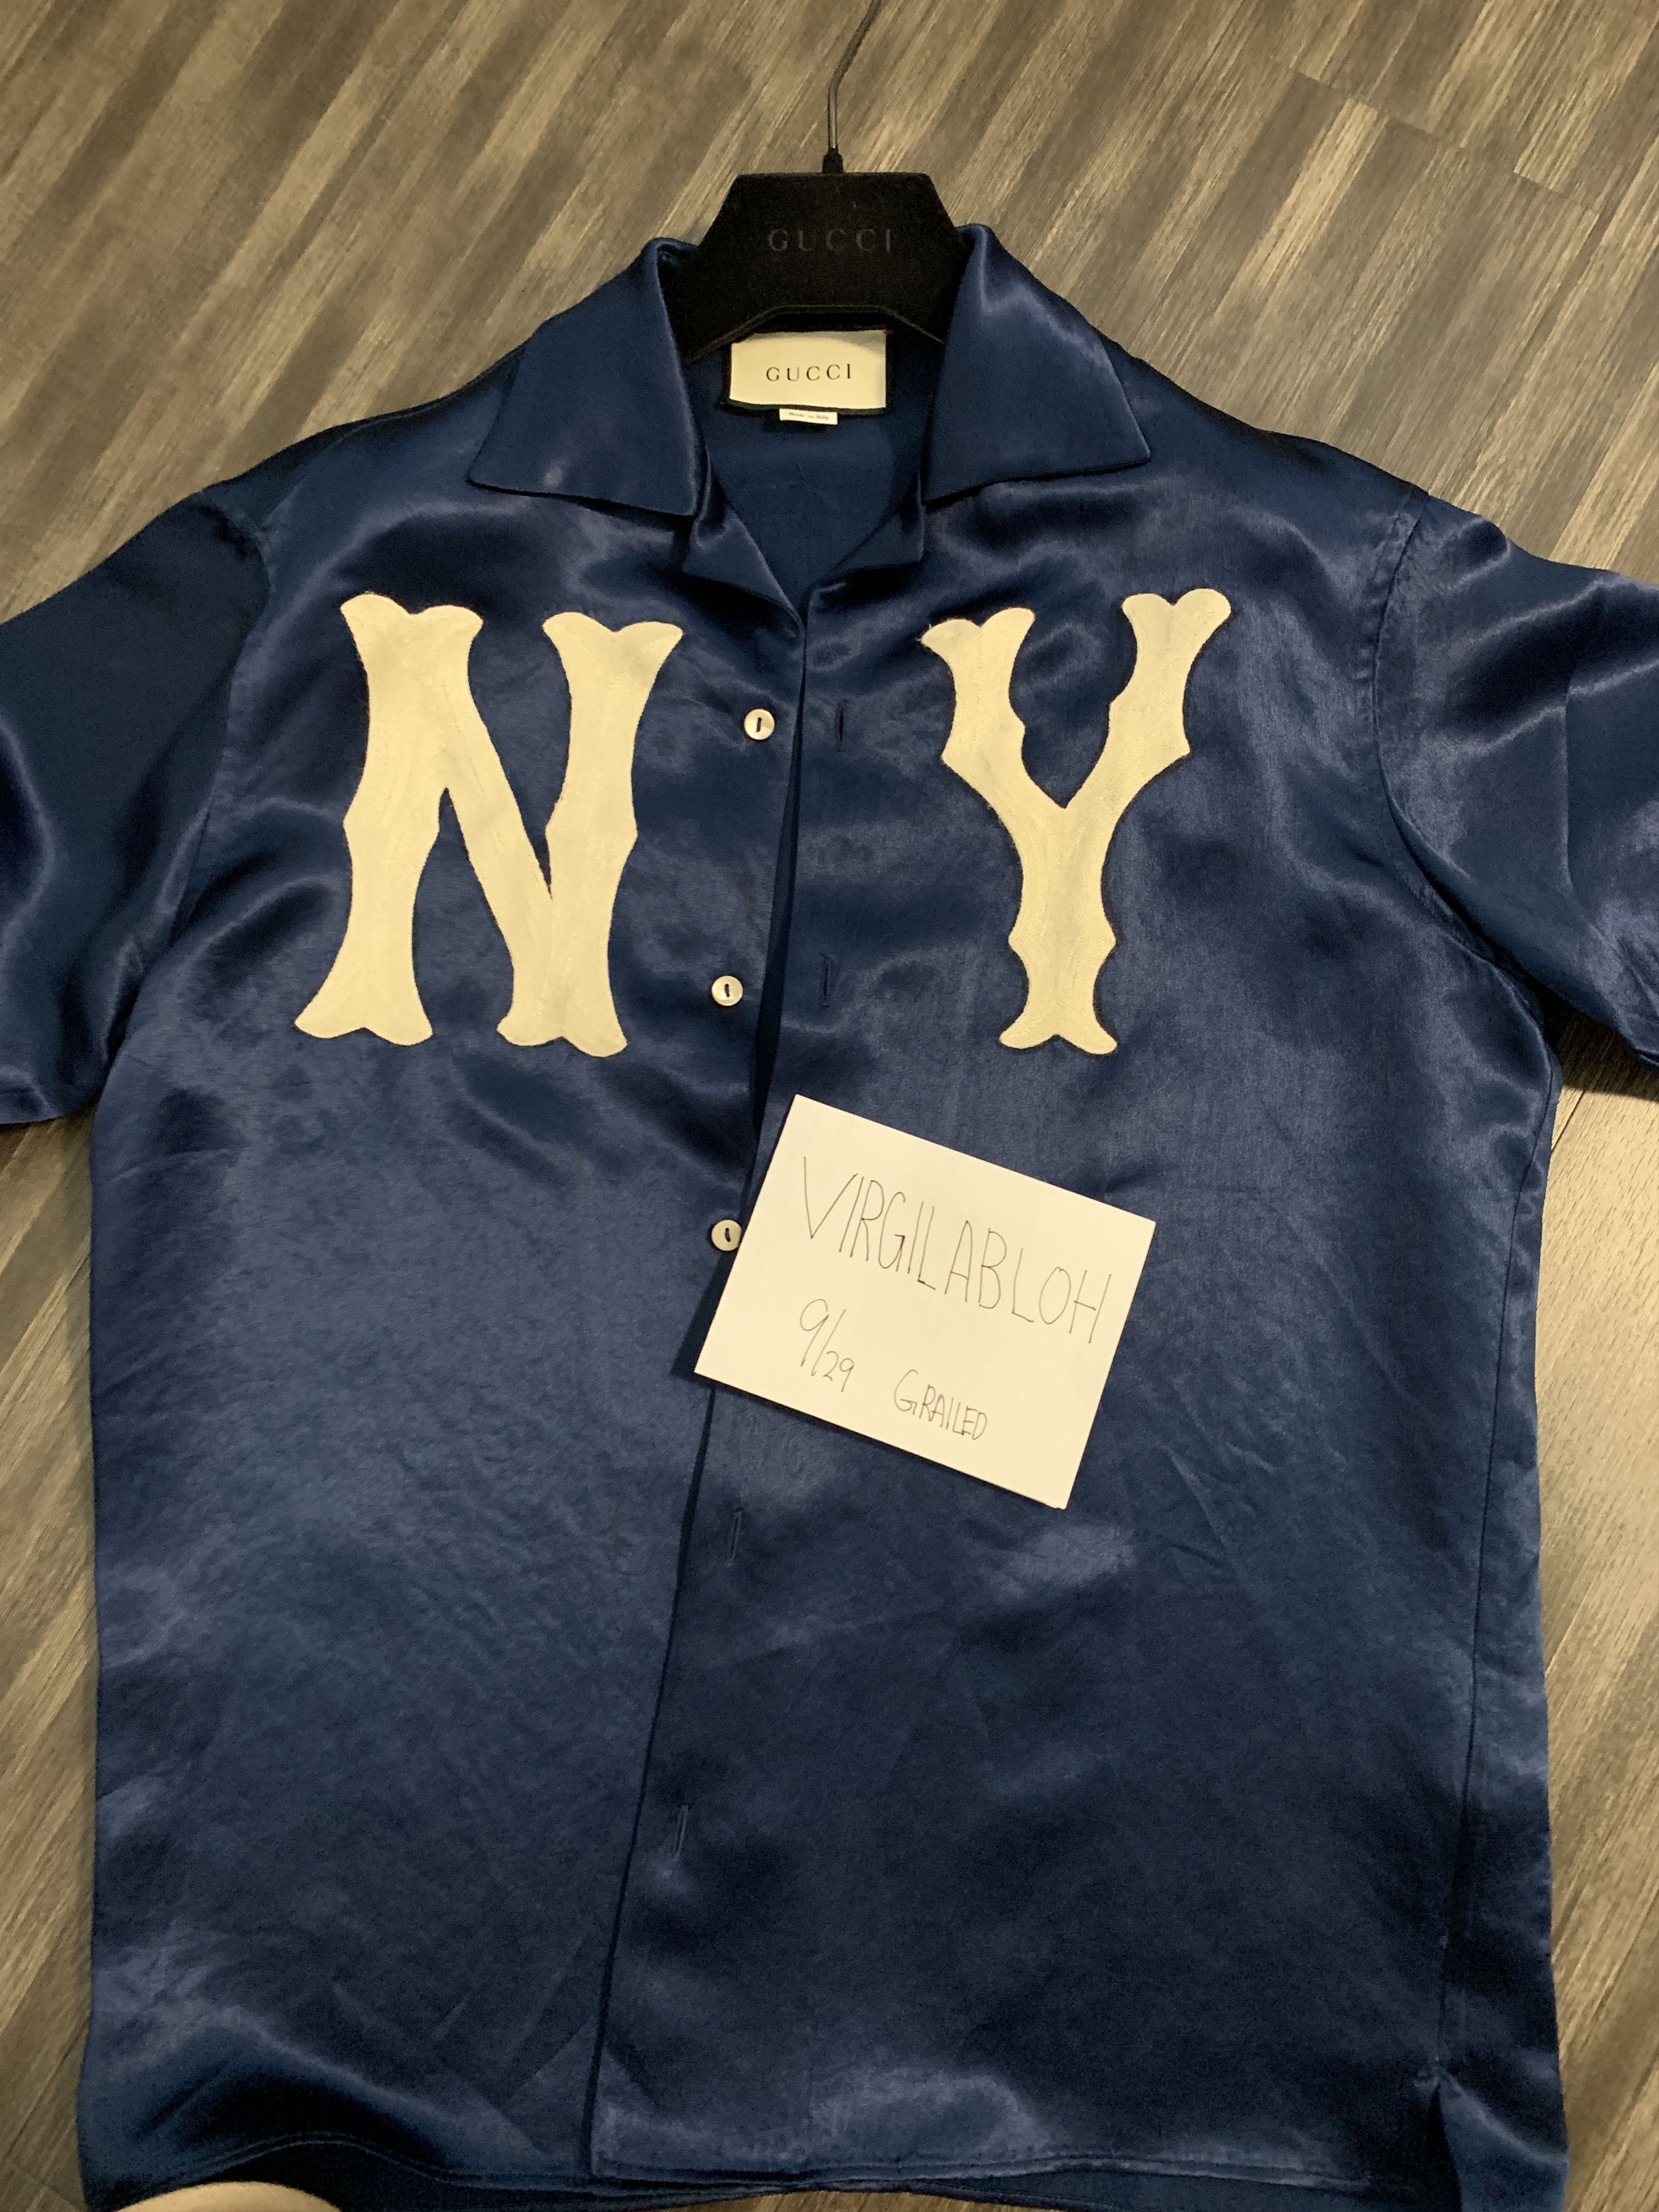 Gucci New York Yankees Patch Bowling Shirt *46